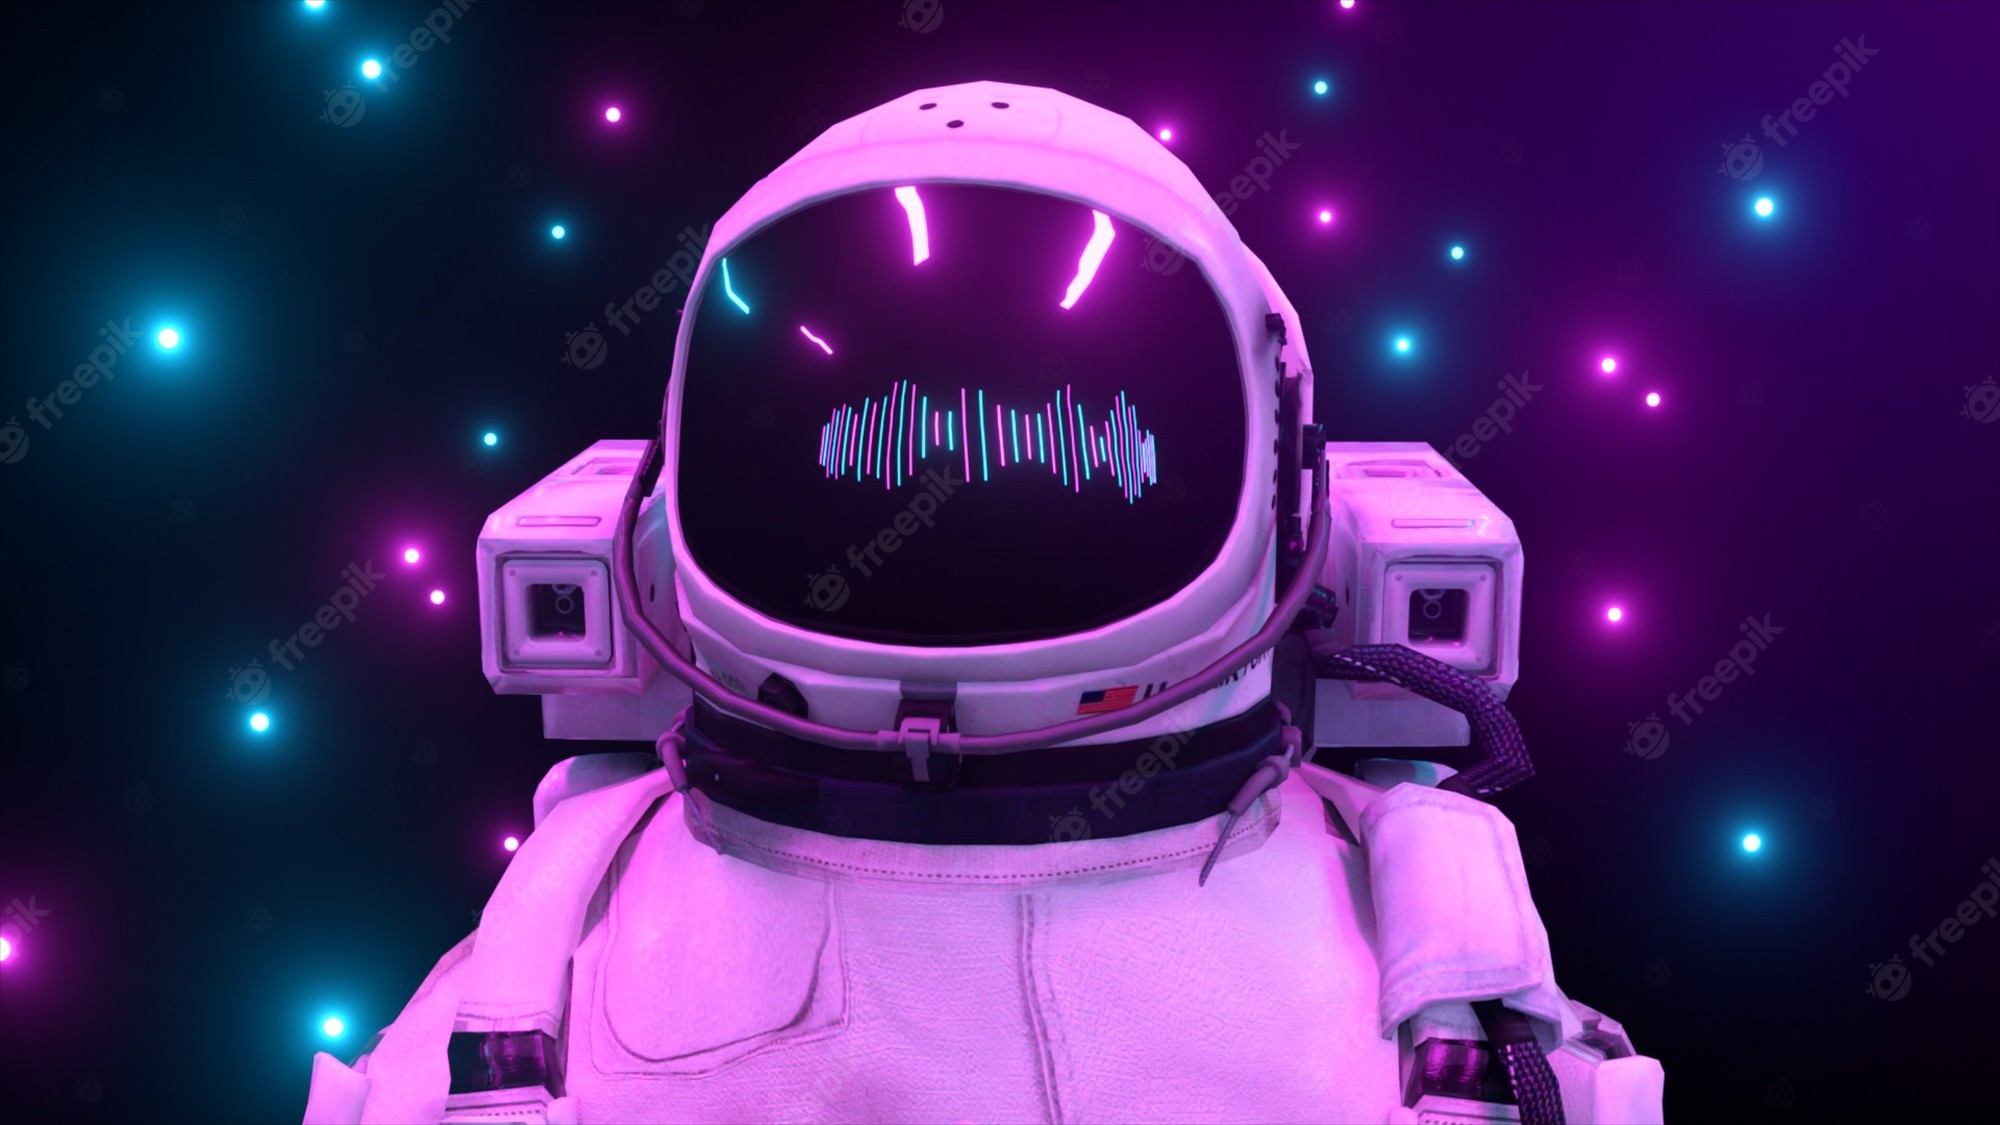 Neon astronaut Image. Free Vectors, & PSD